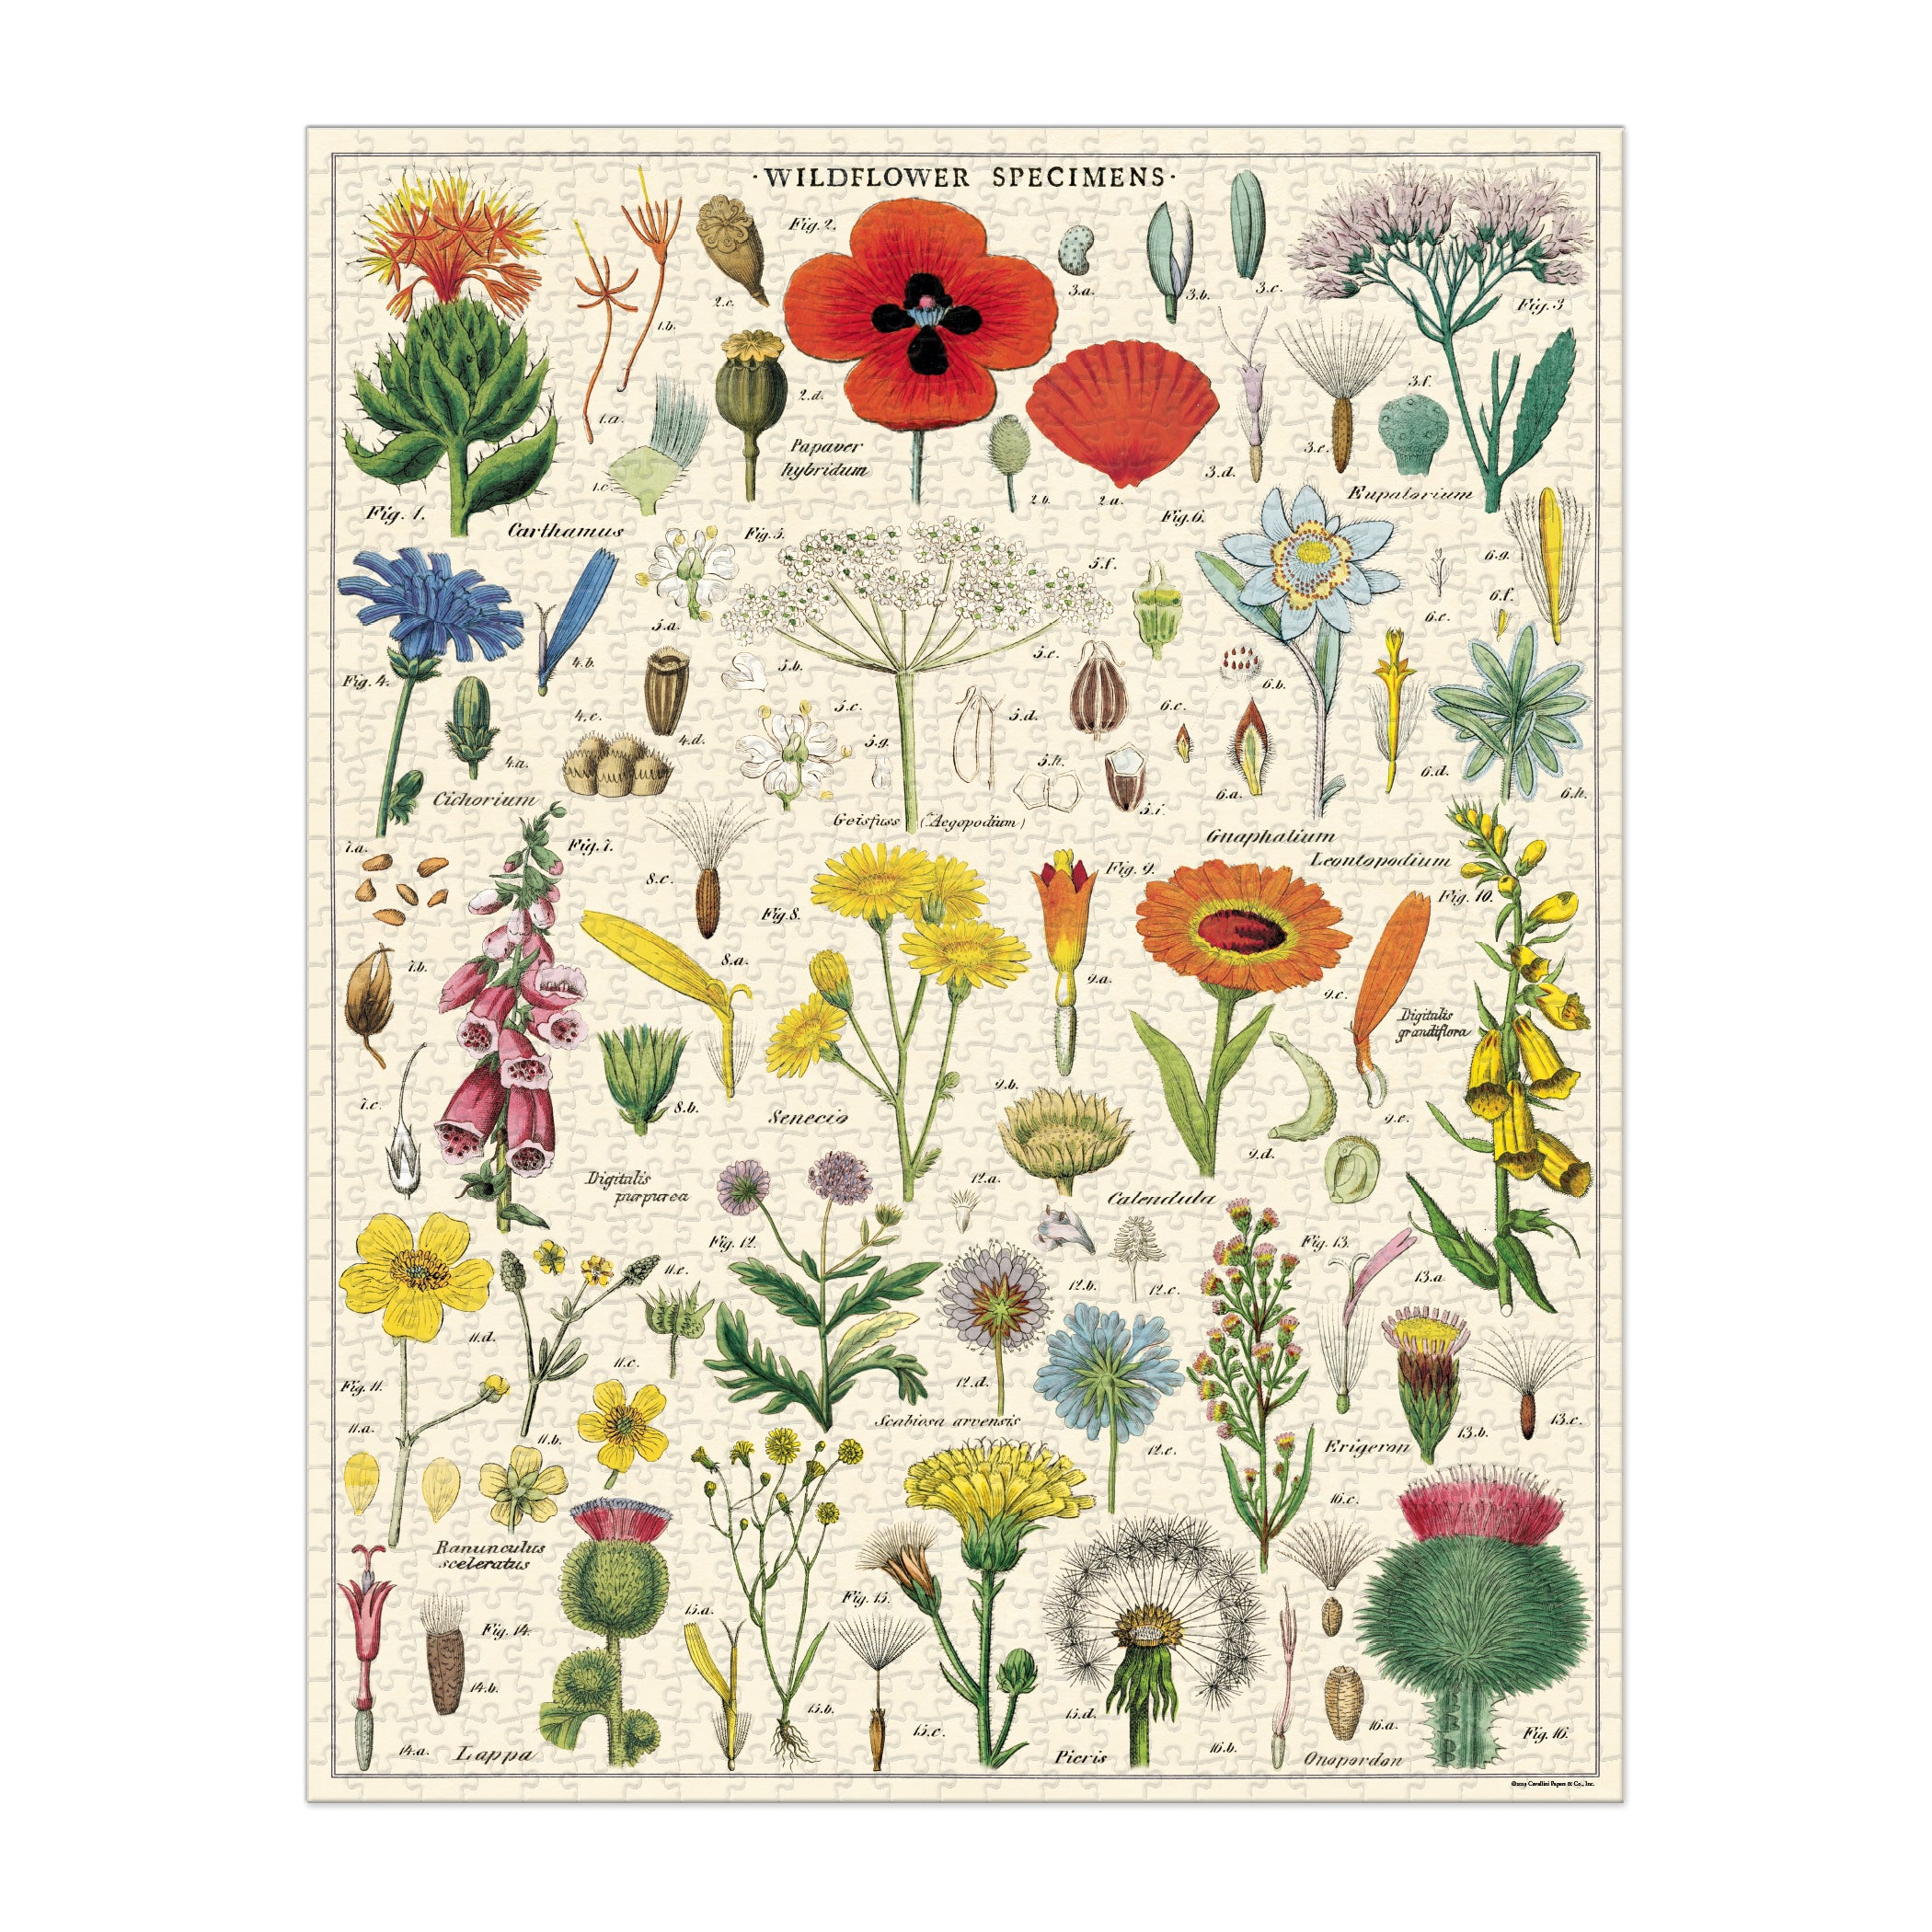 Wildflowers 1000 Piece Puzzle